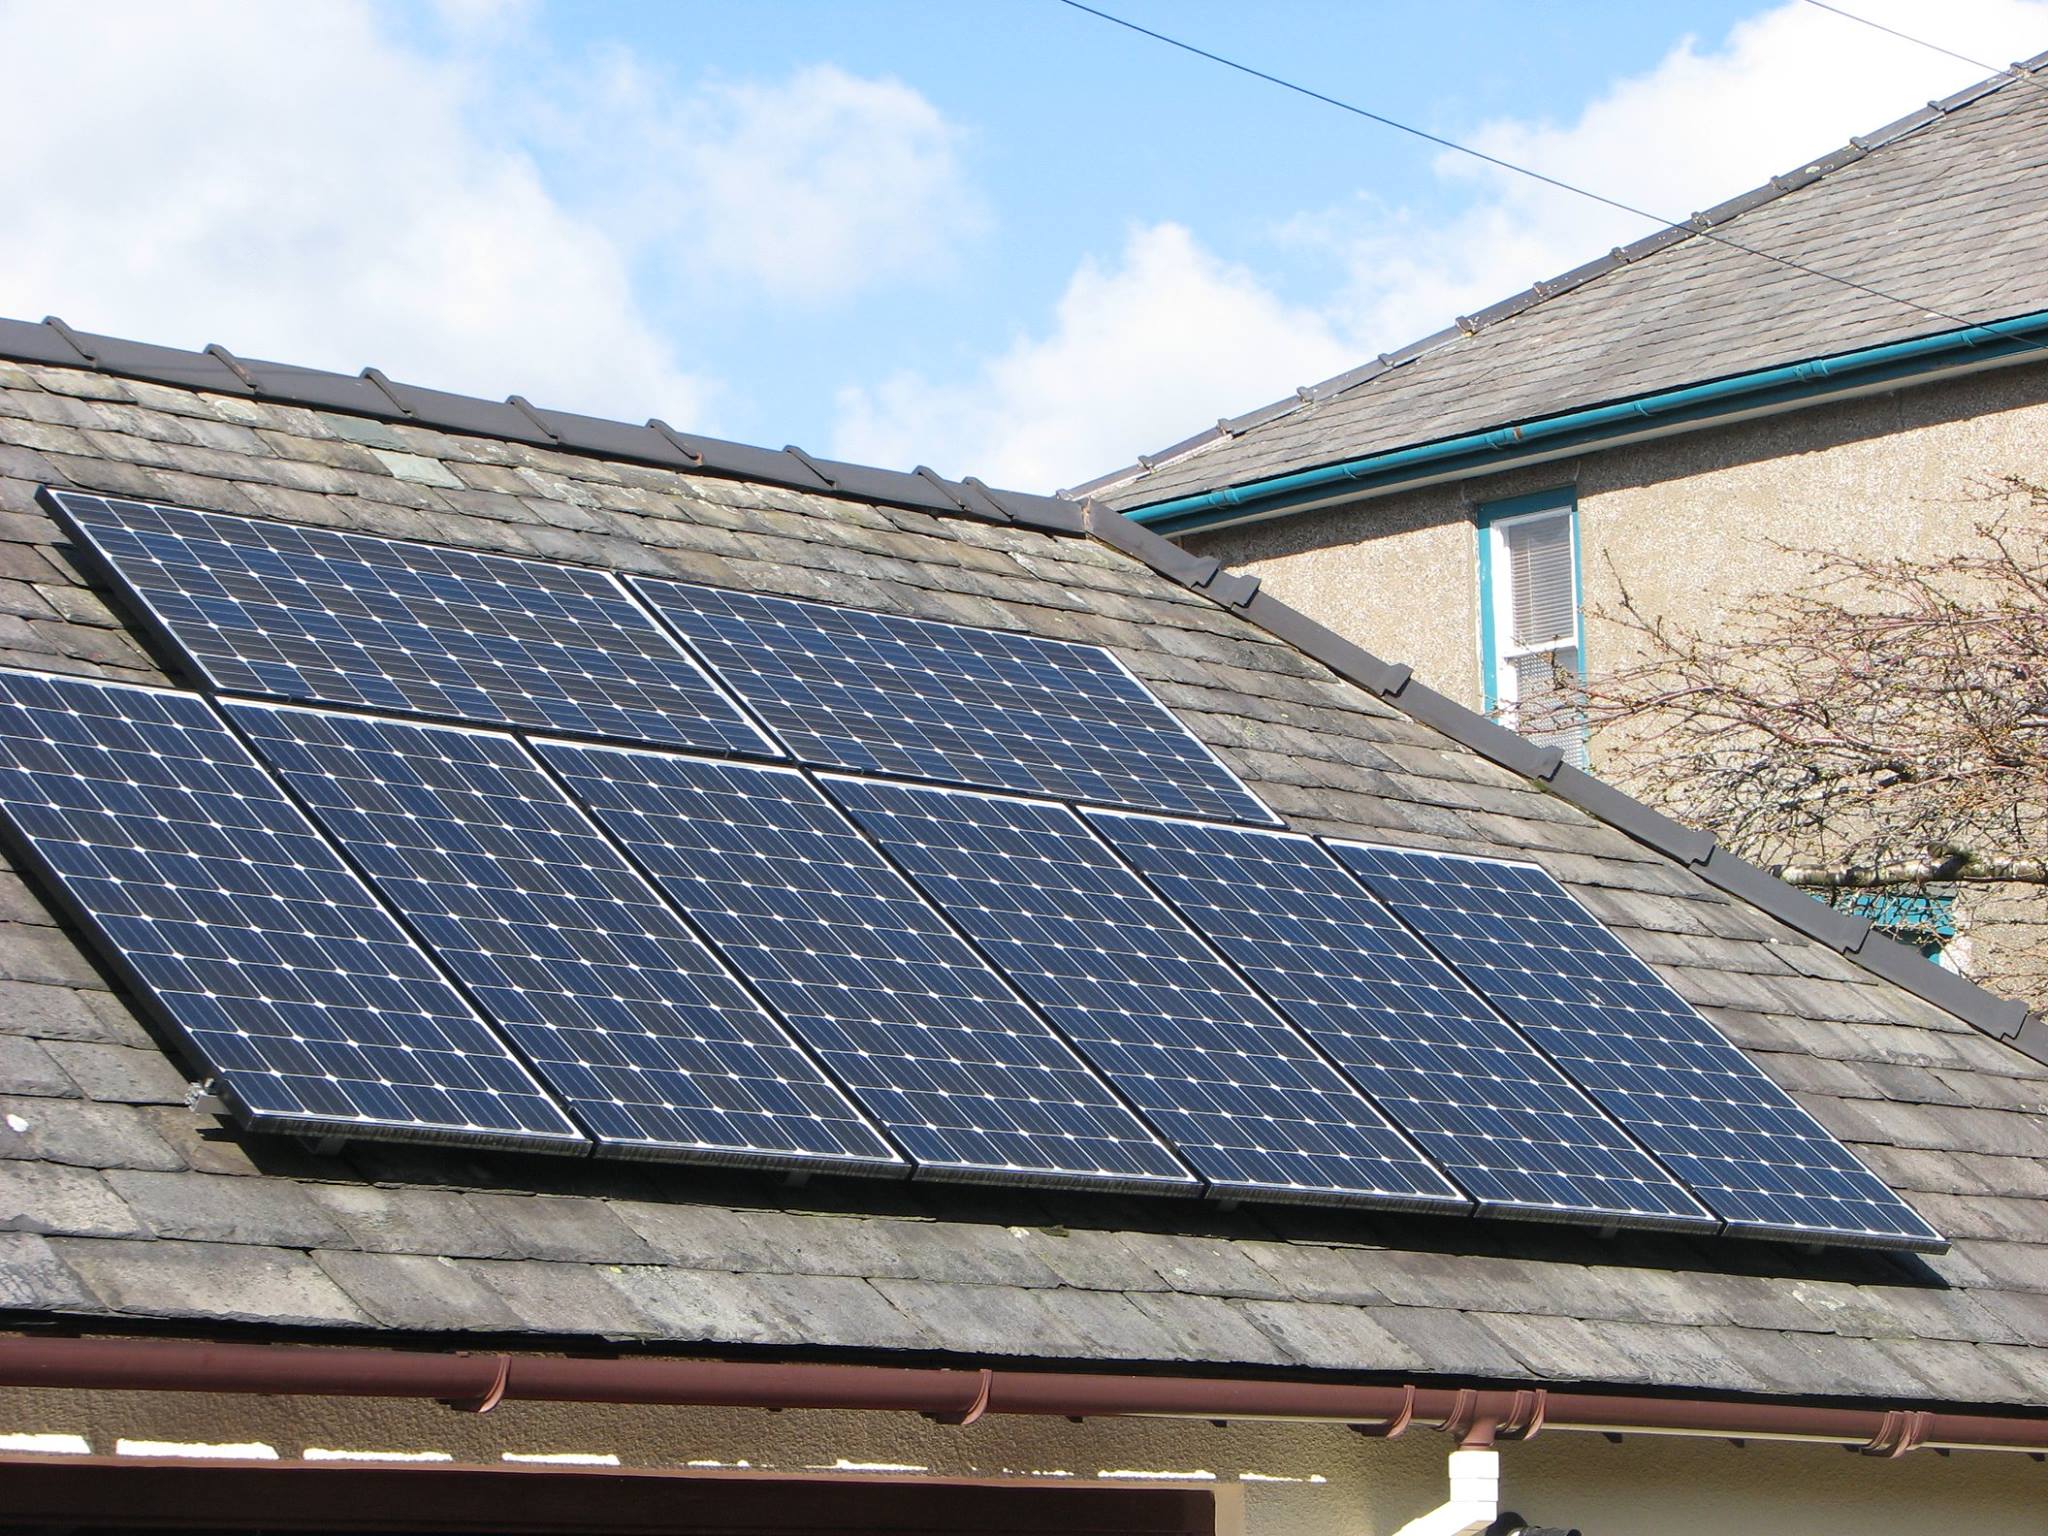 solar pv array on a house roof